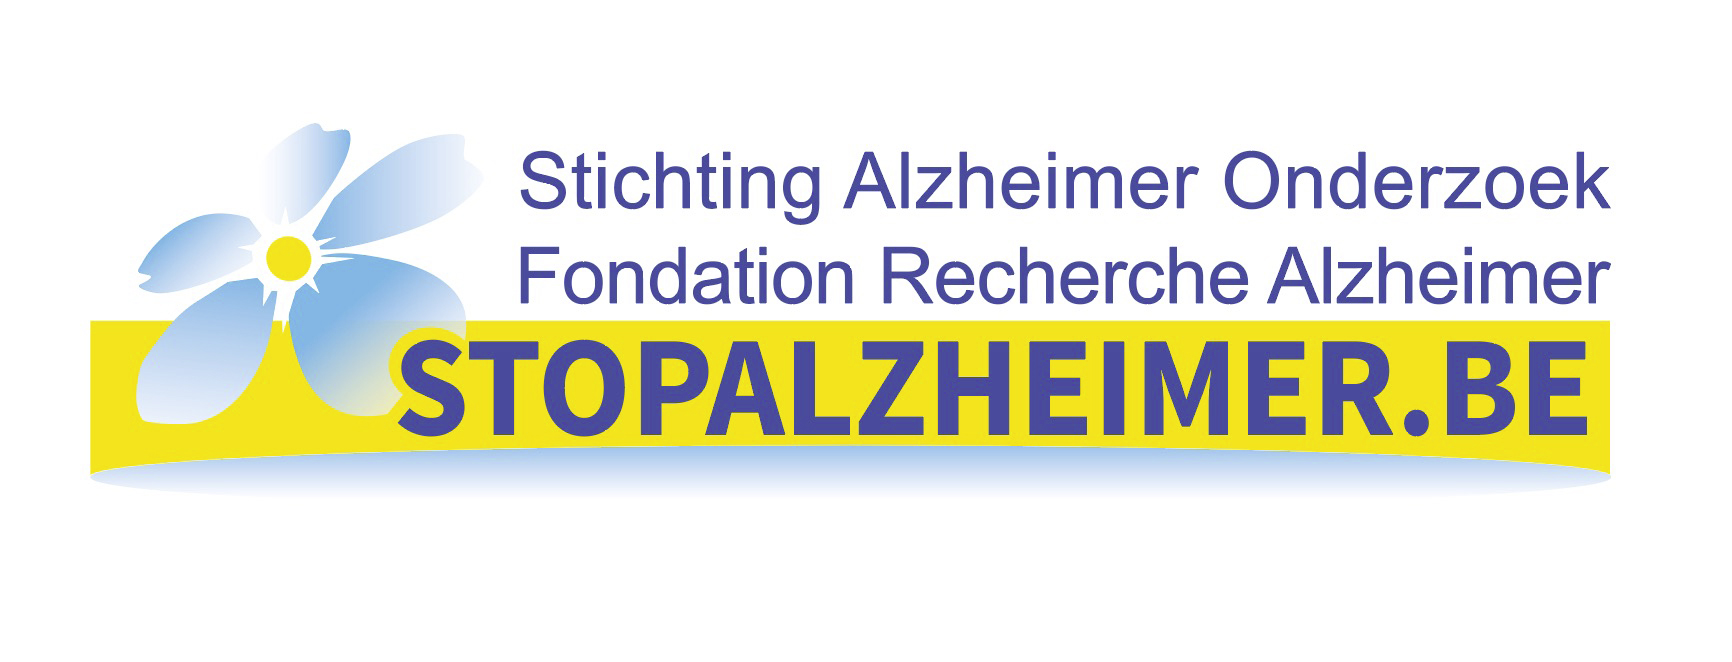 Stop Alzheimer - Stichting Alzheimer Onderzoek / Fondation Recherche Alzheimer